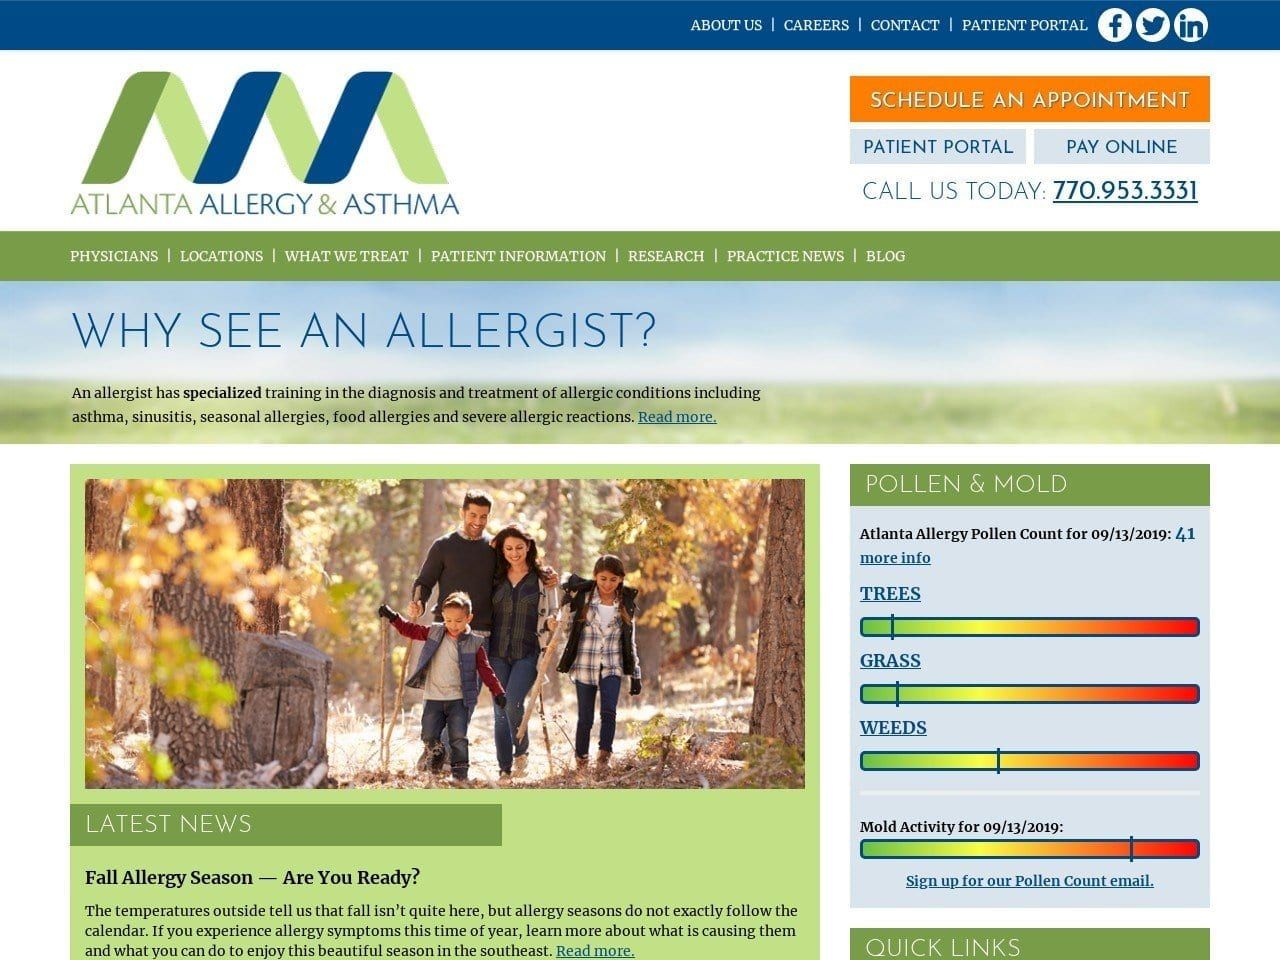 Atlanta Allergy/Asthma Clinic Website Screenshot from atlantaallergy.com